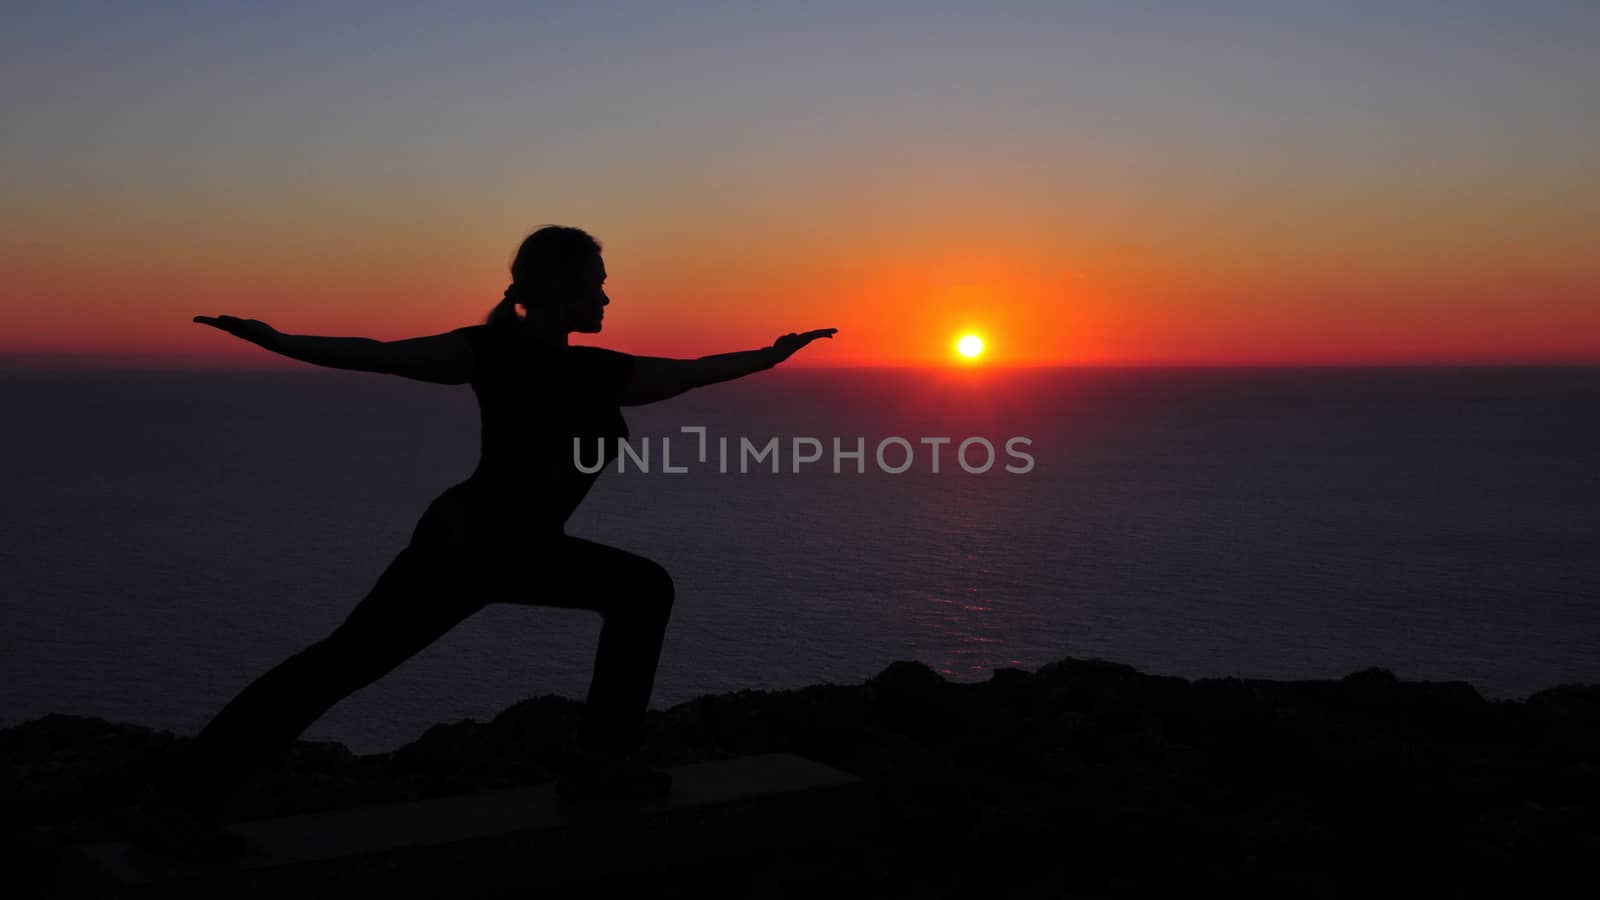 Woman doing yoga during sunset